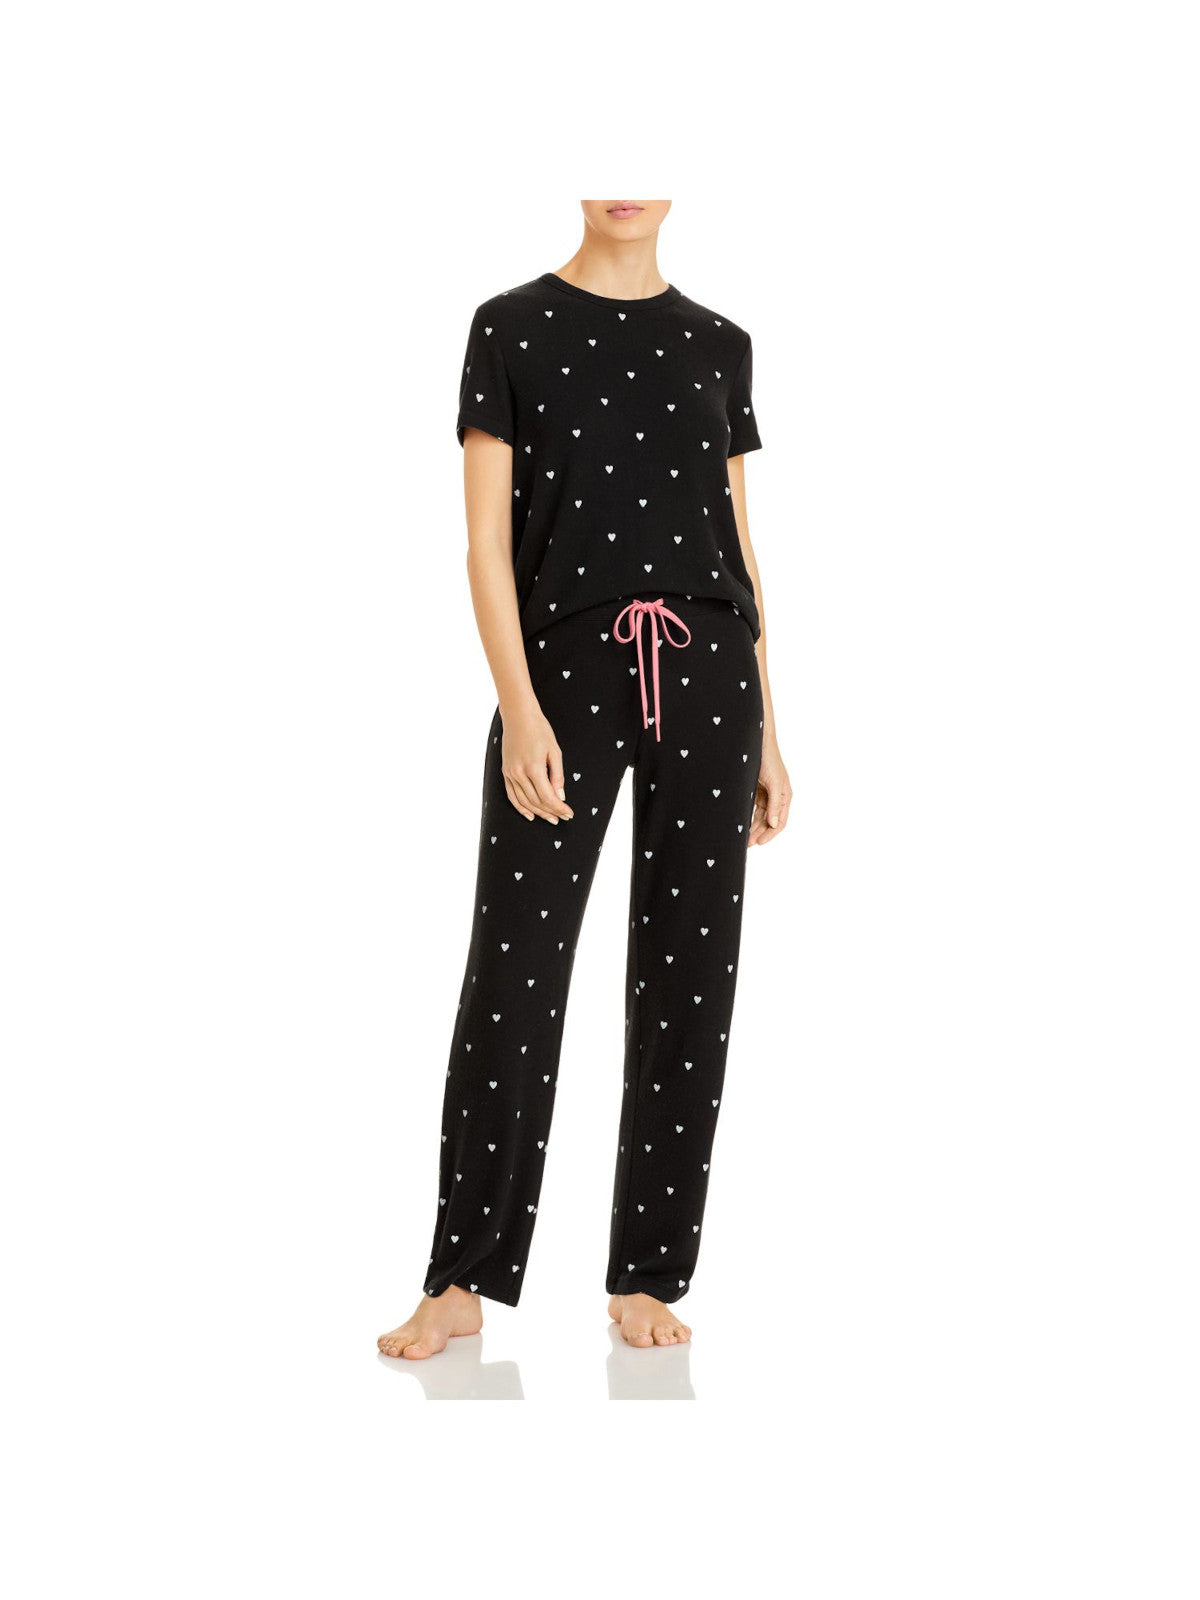 AQUA Womens Black Patterned Drawstring T-Shirt Top Straight leg Pants Stretch Pajamas M